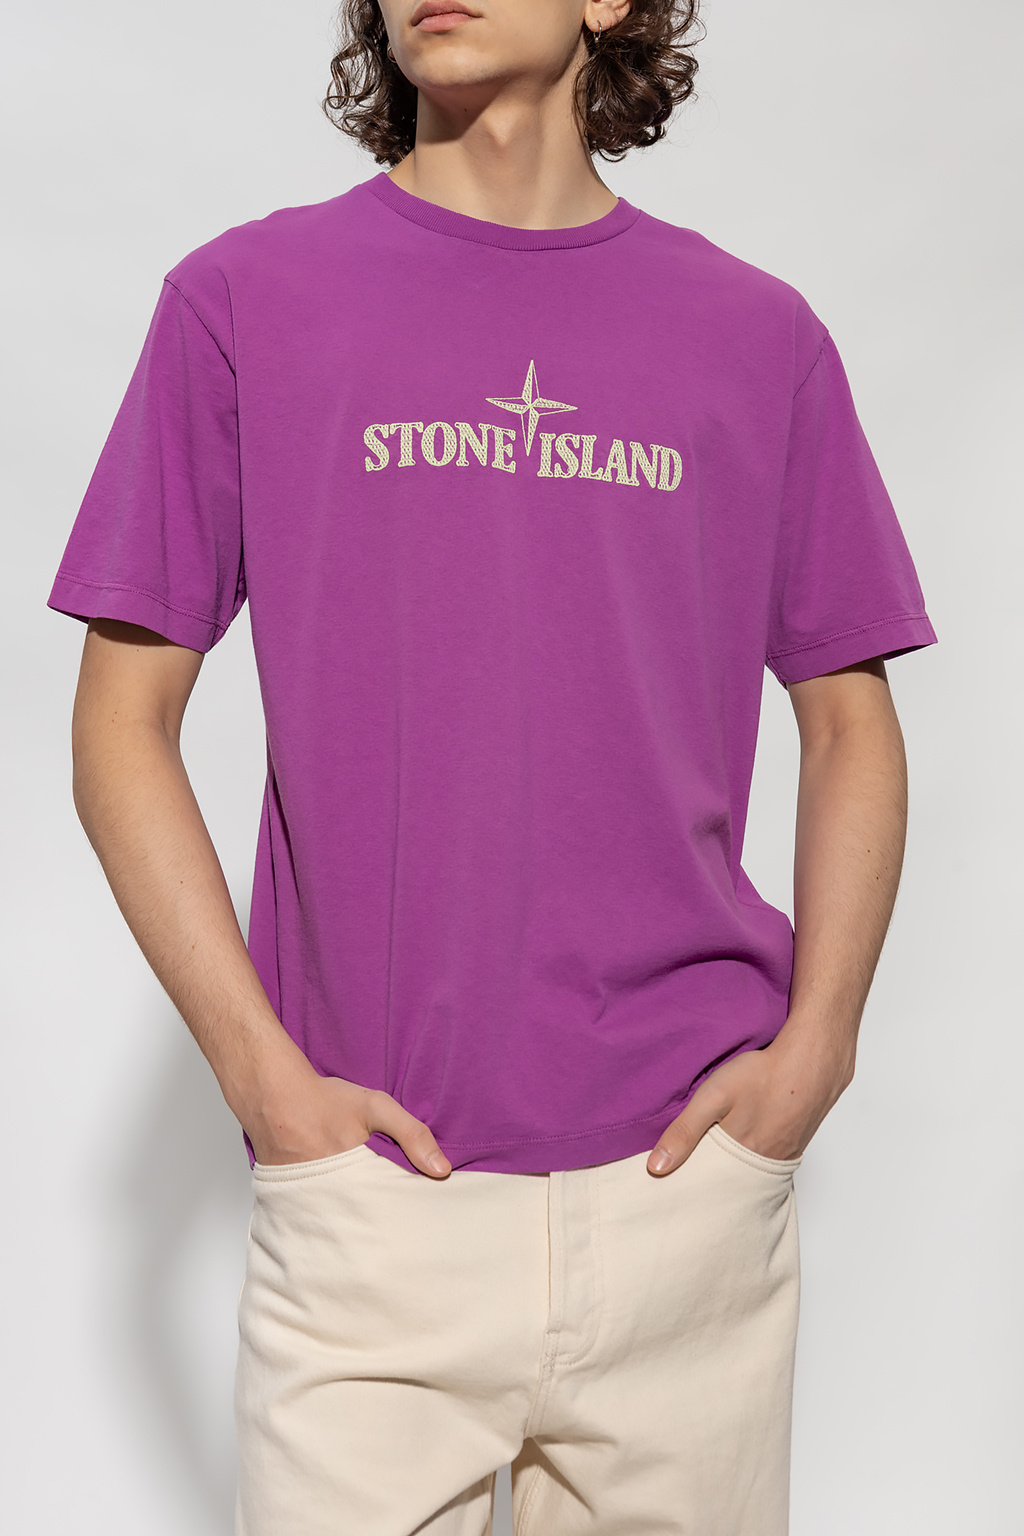 Stone Island Jack Wills Wadsworth Stripe Oxford Shirt